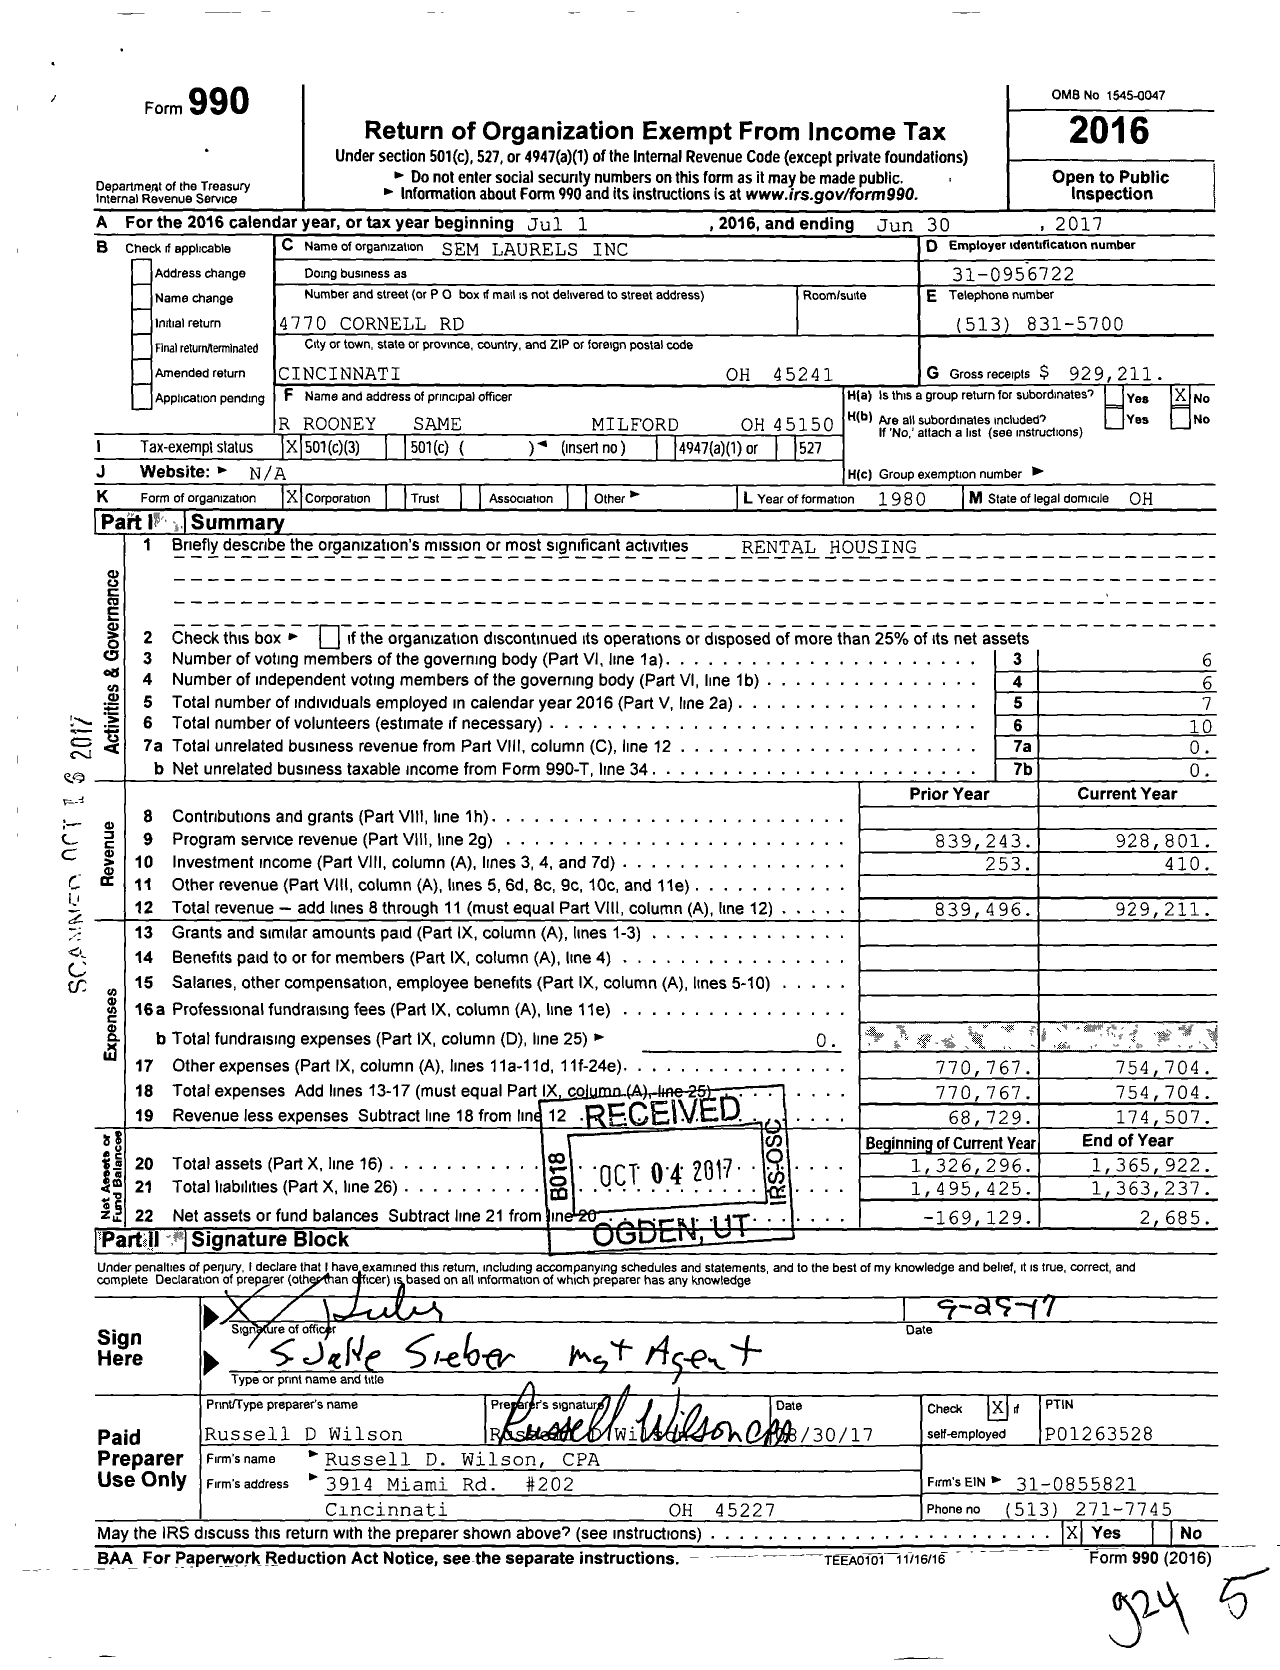 Image of first page of 2016 Form 990 for Sem Laurels